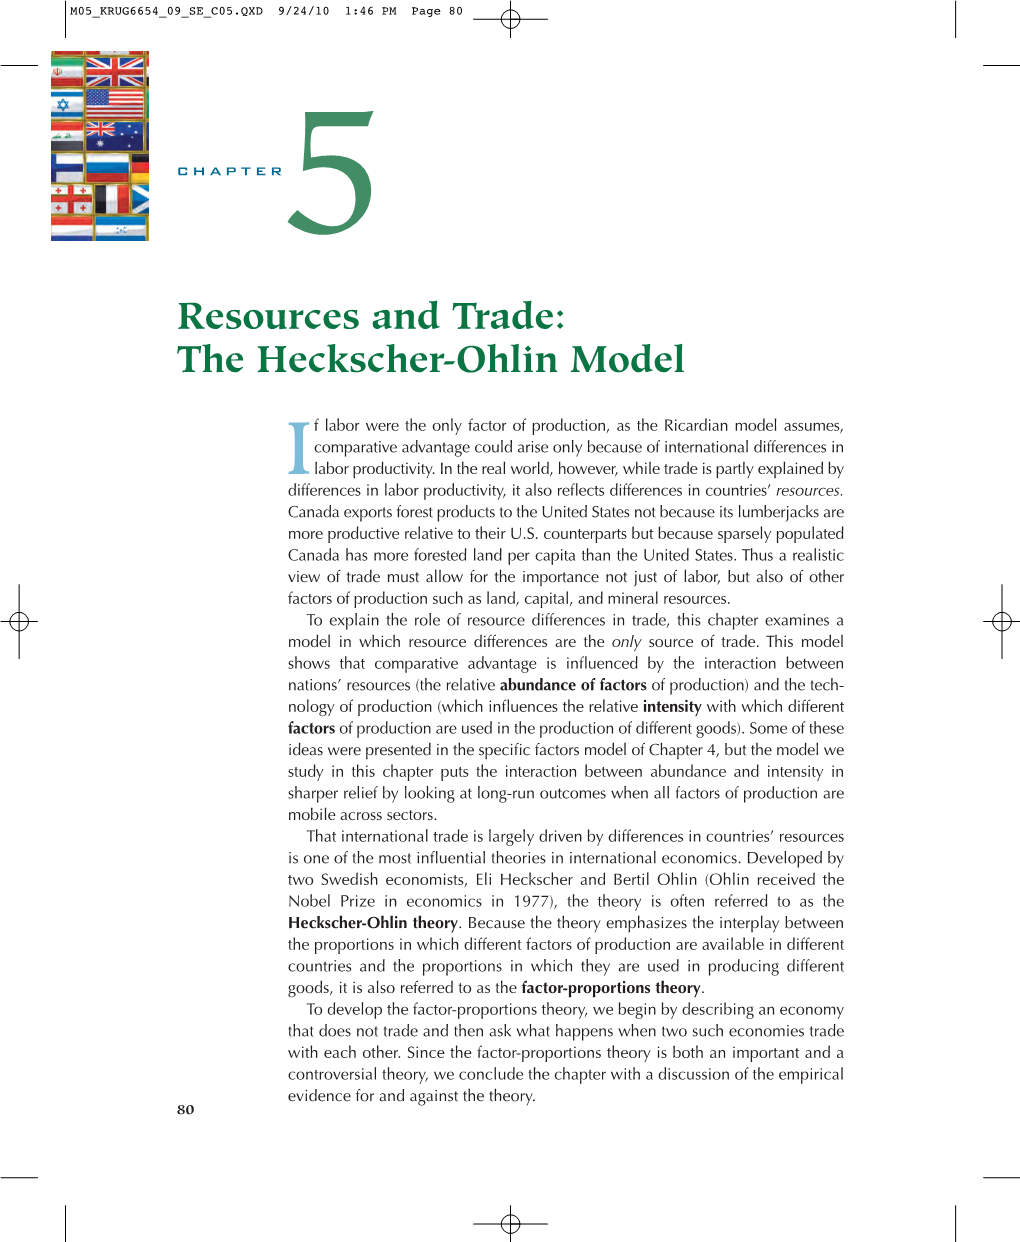 Resources and Trade: the Heckscher-Ohlin Model